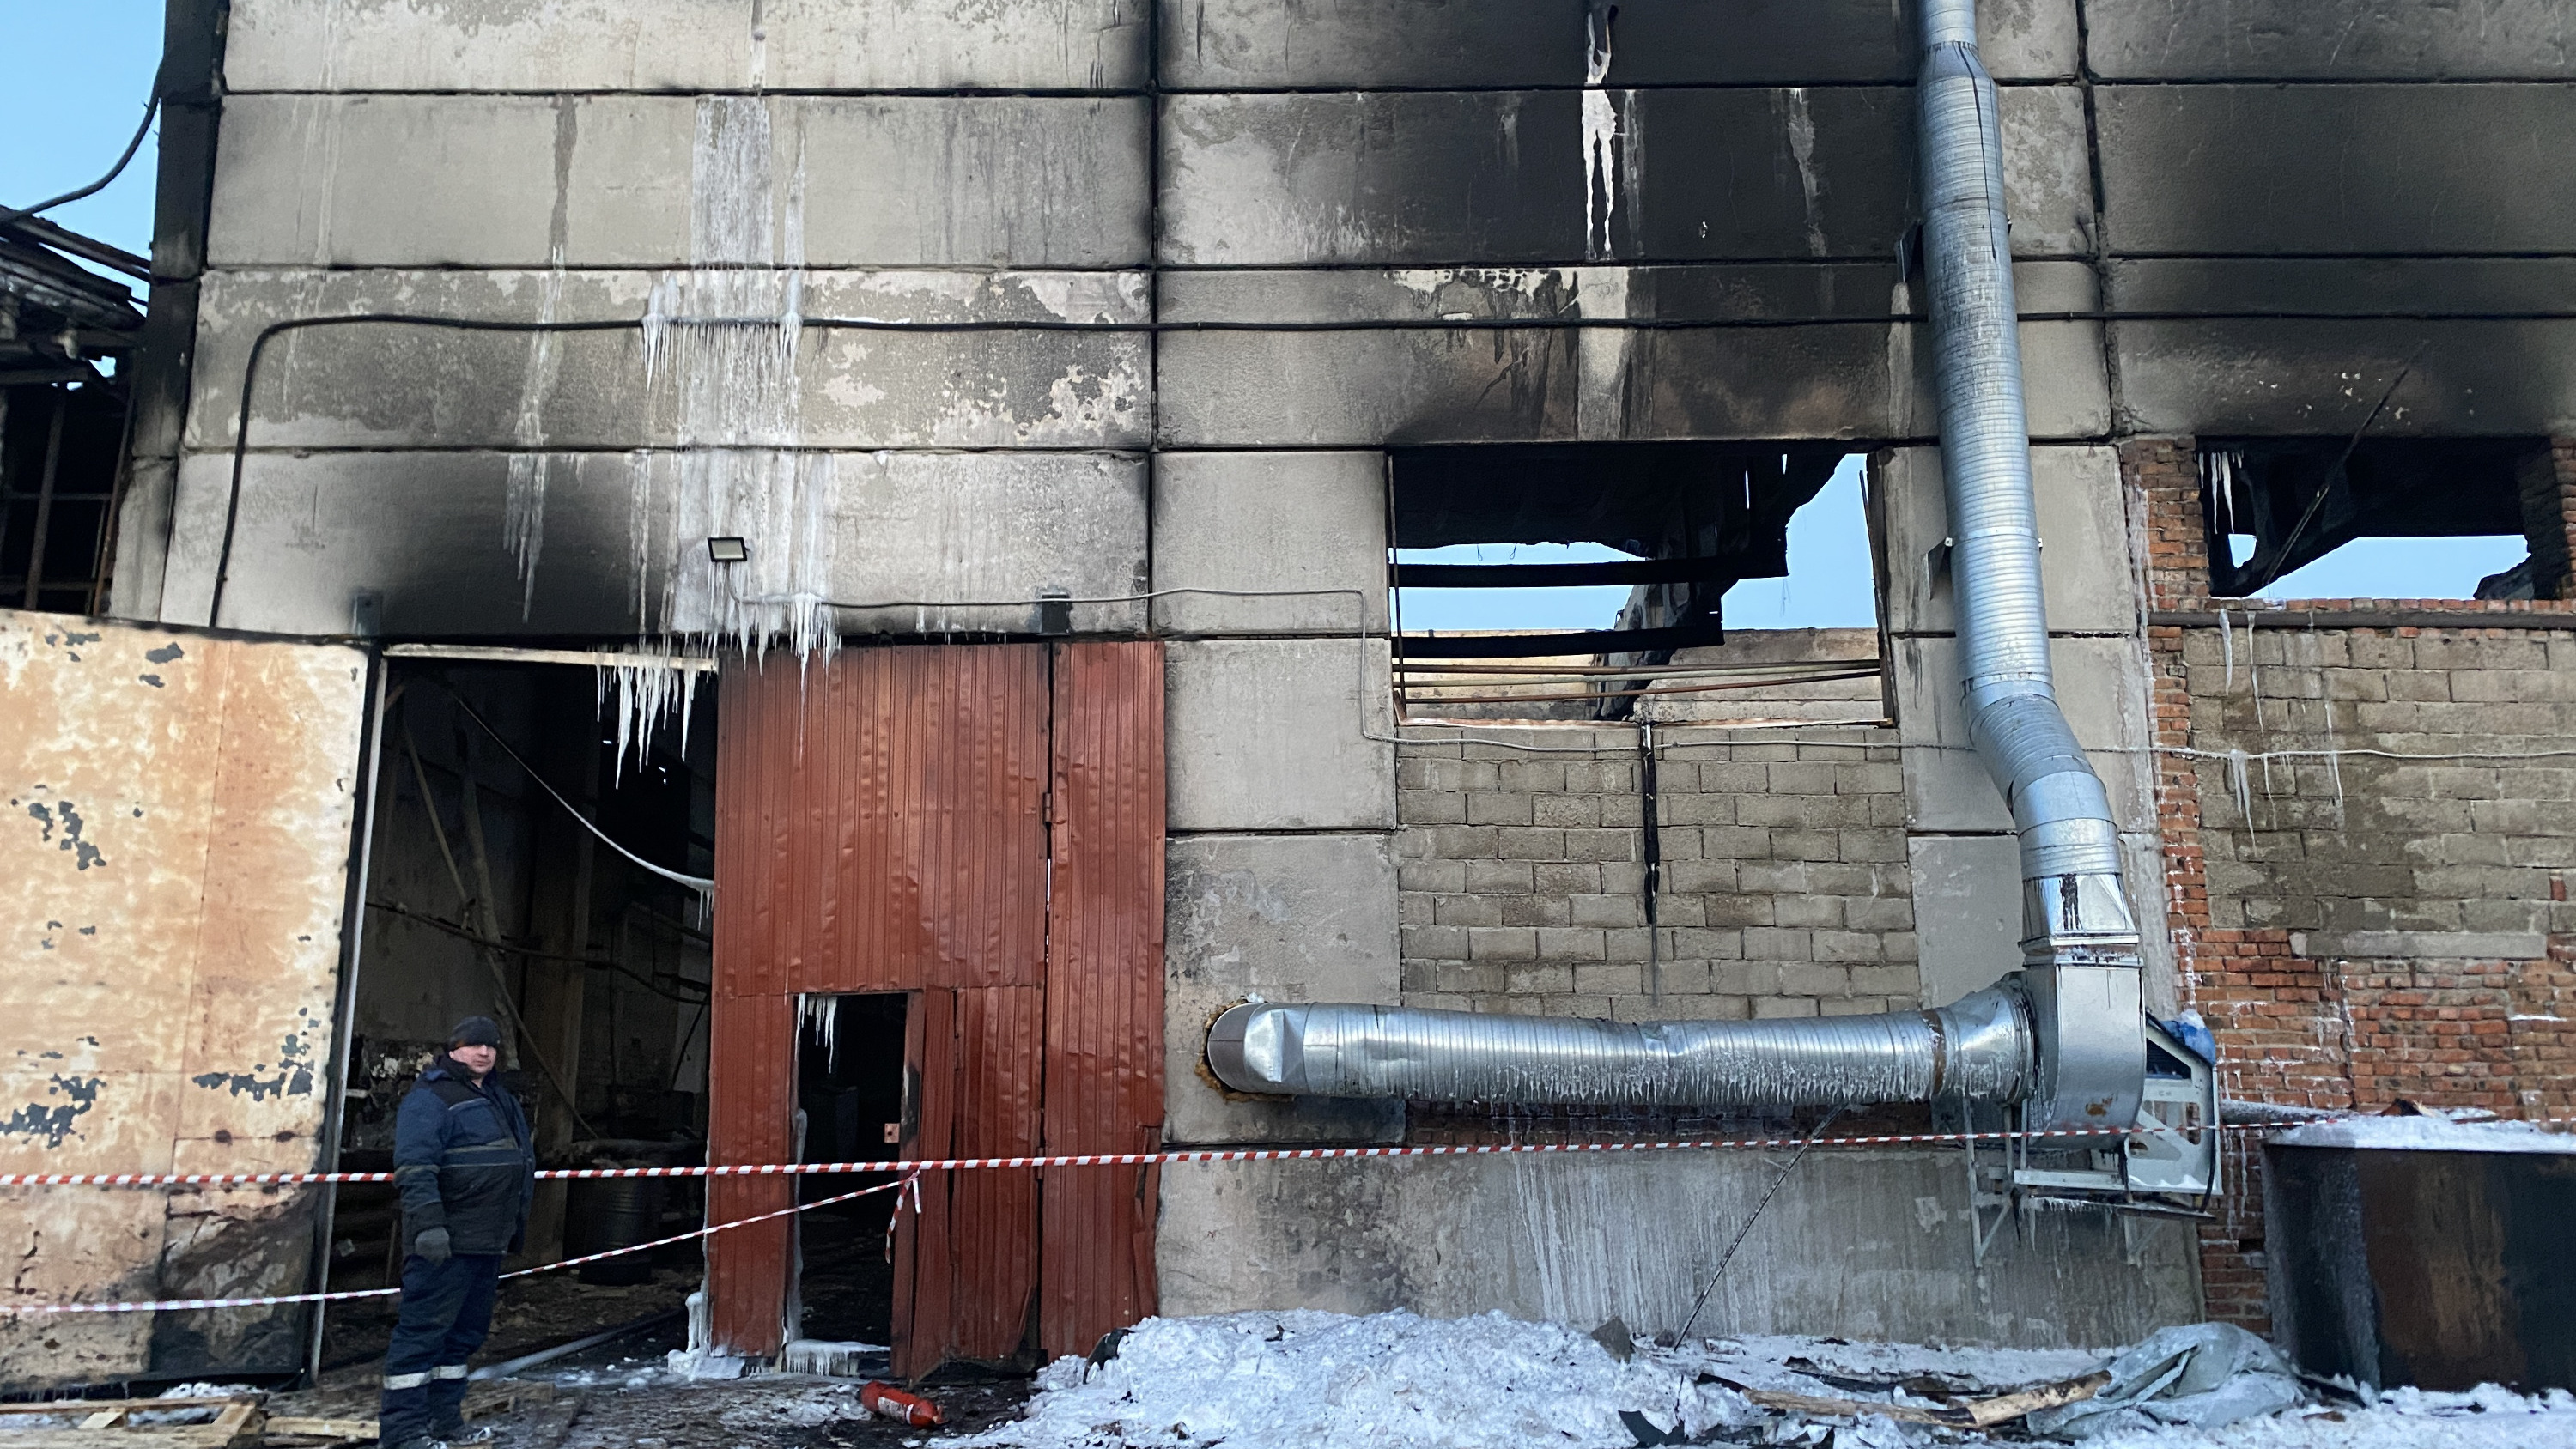 Один горевший омский склад посреди заводов. Фоторепортаж последствий ночного пожара